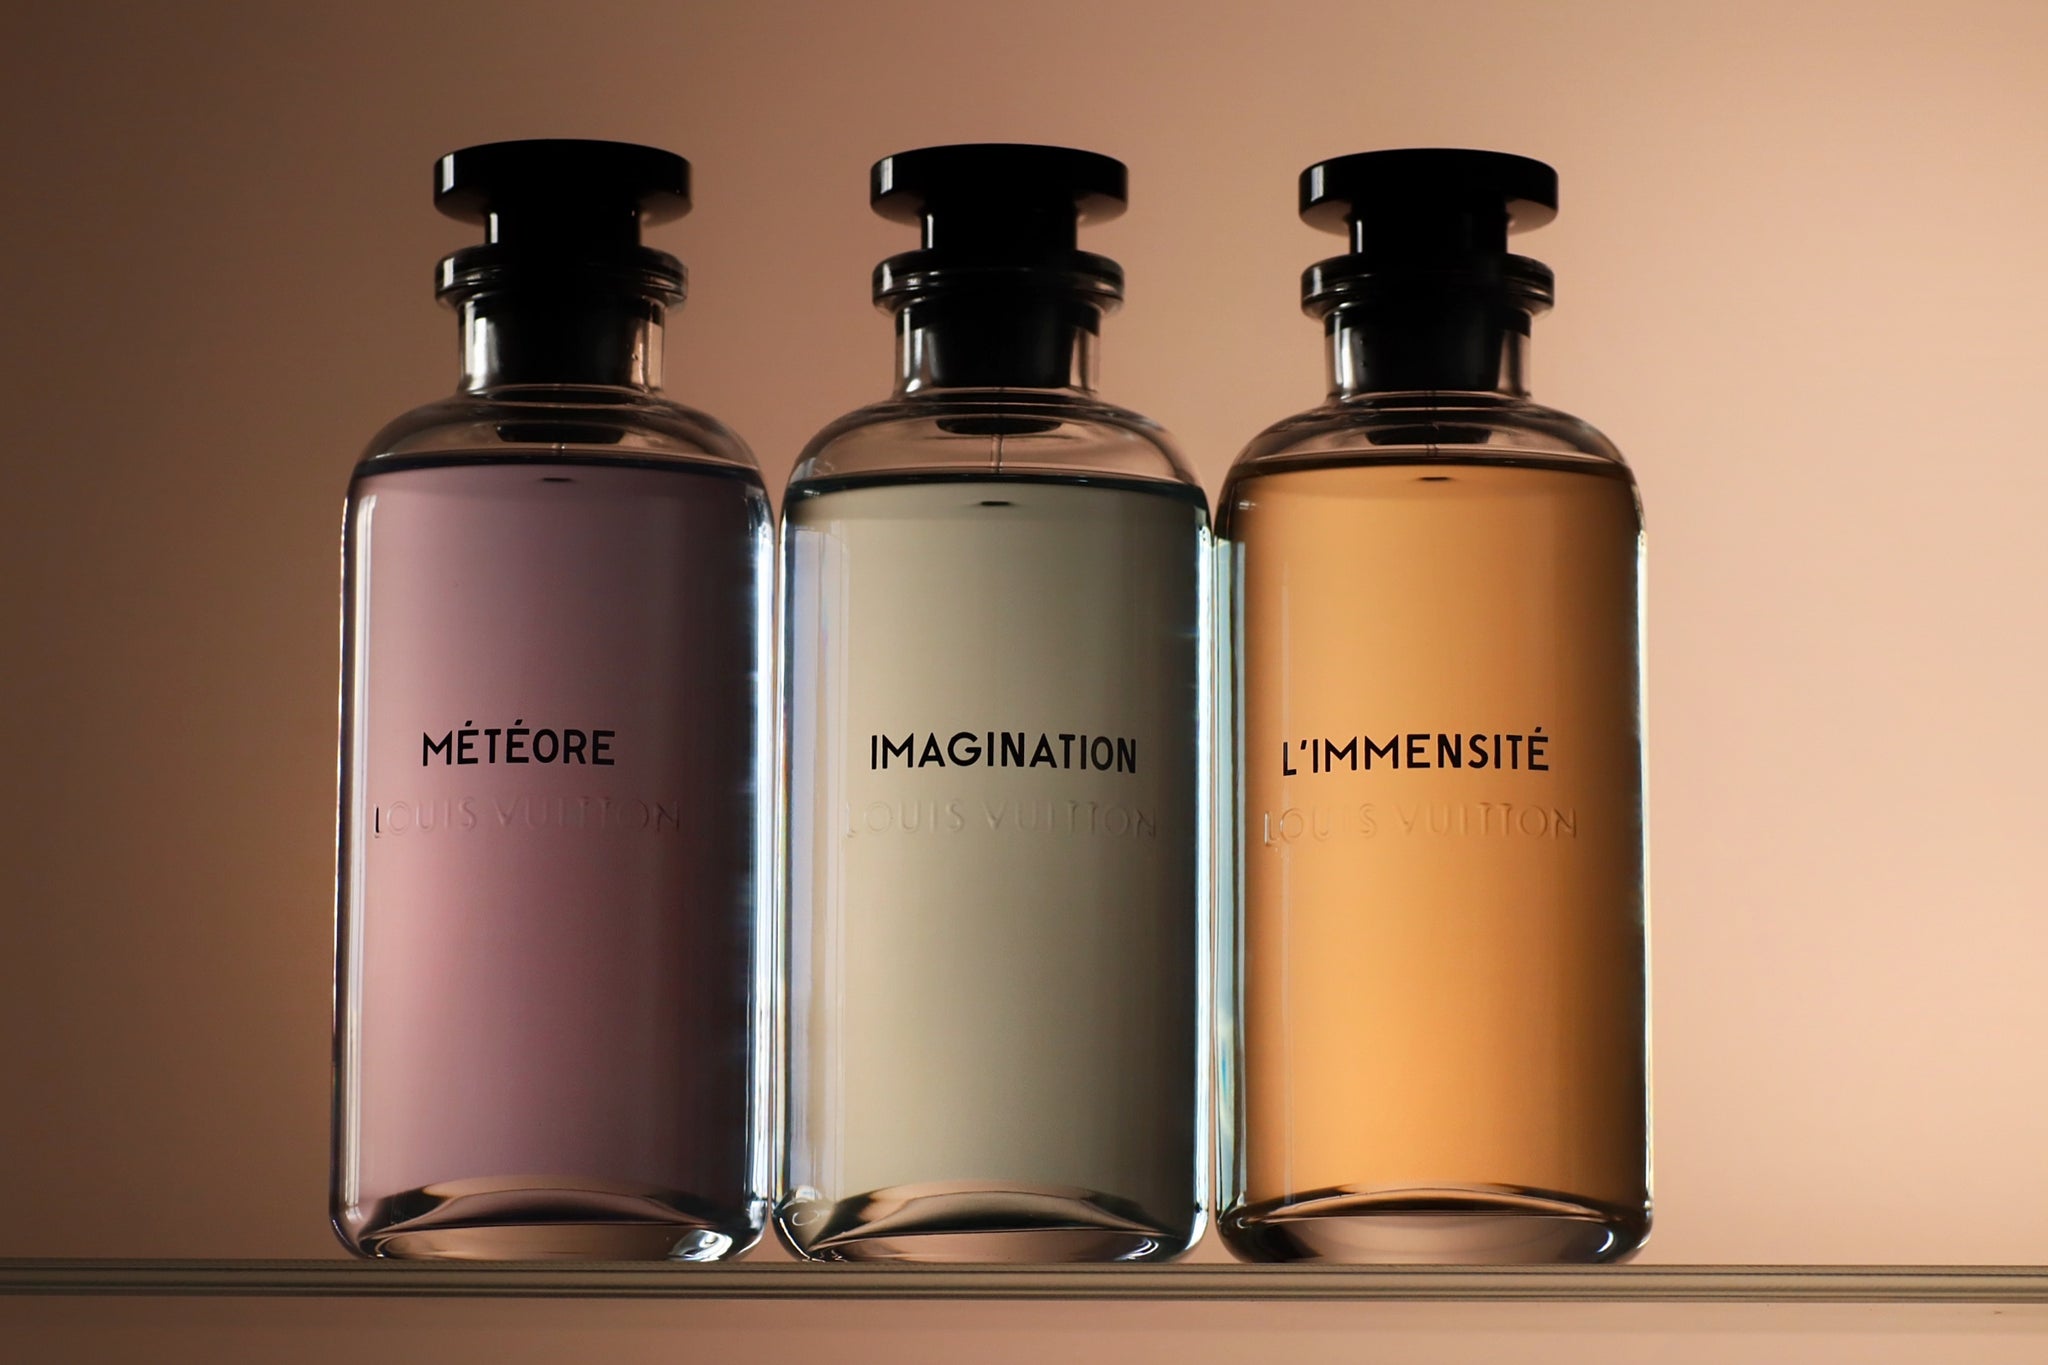 Louis Vuitton Perfume Fragrances for Men